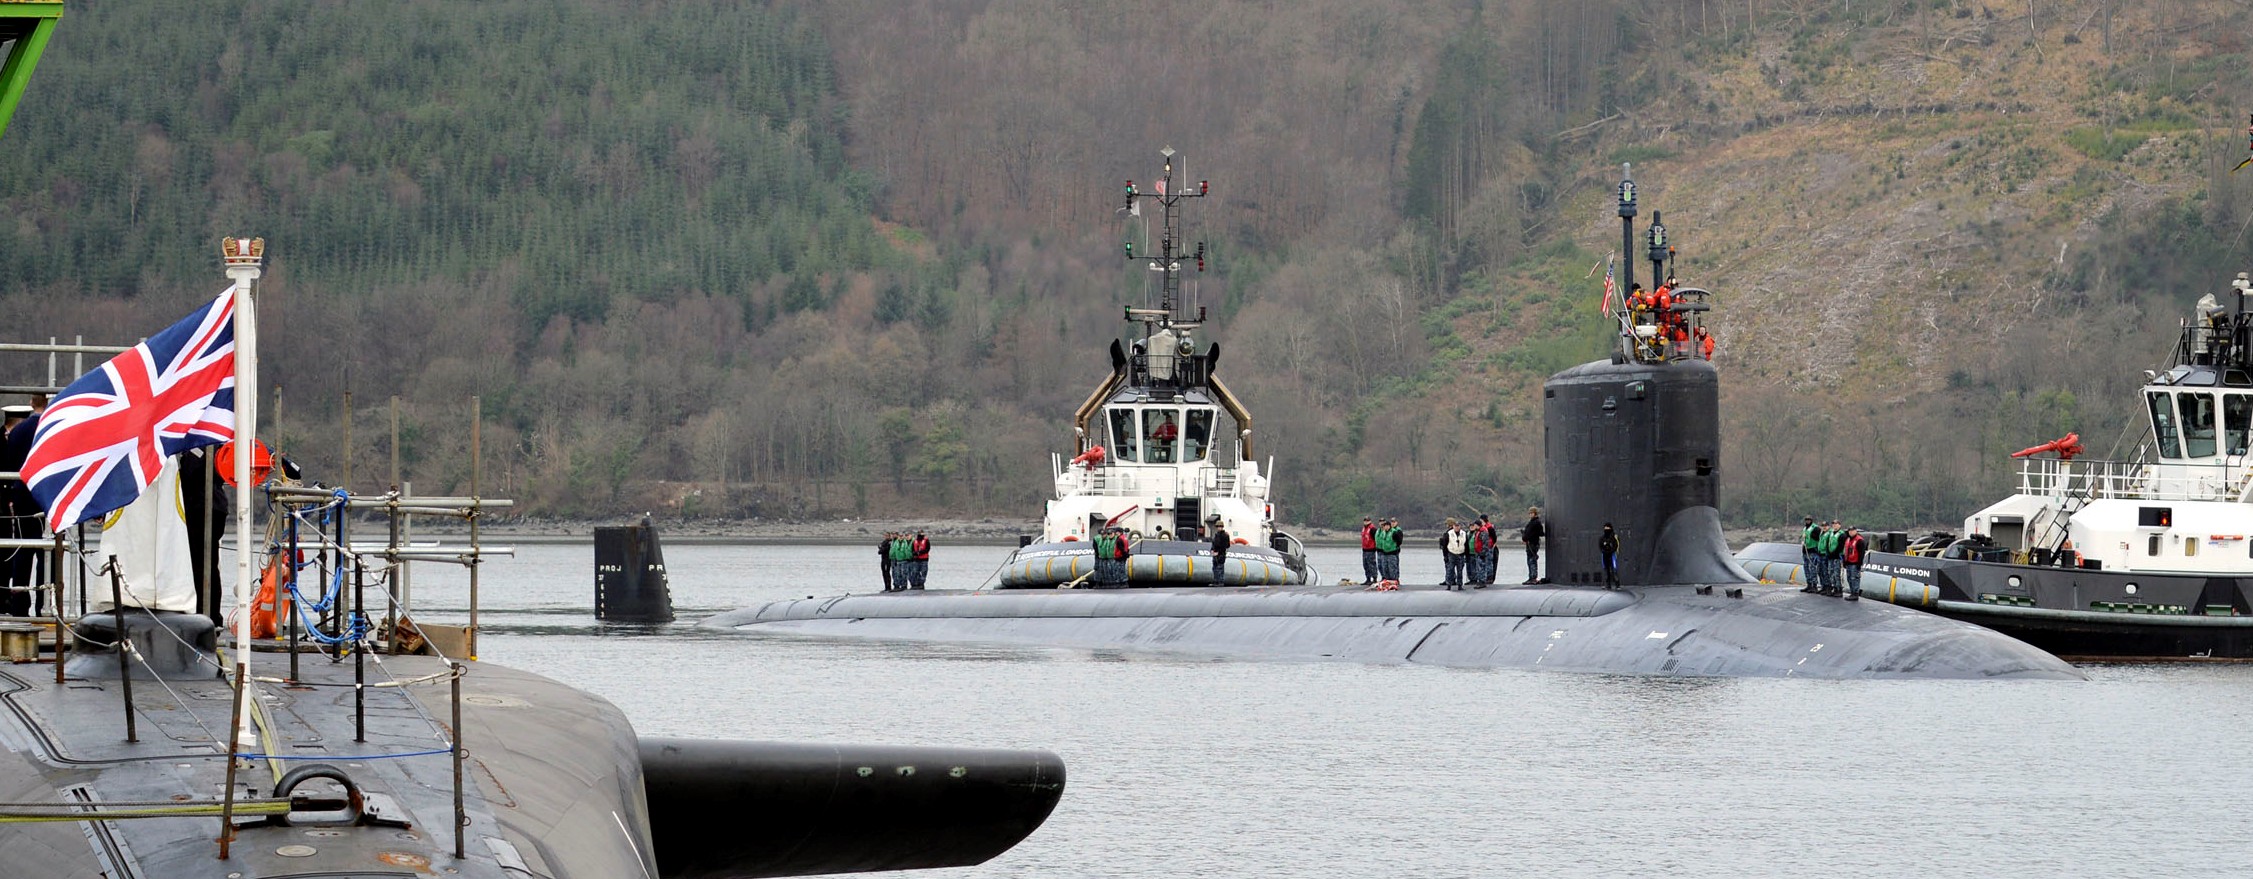 ssn-774 uss virginia attack submarine navy 2016 02 faslane scotland uk